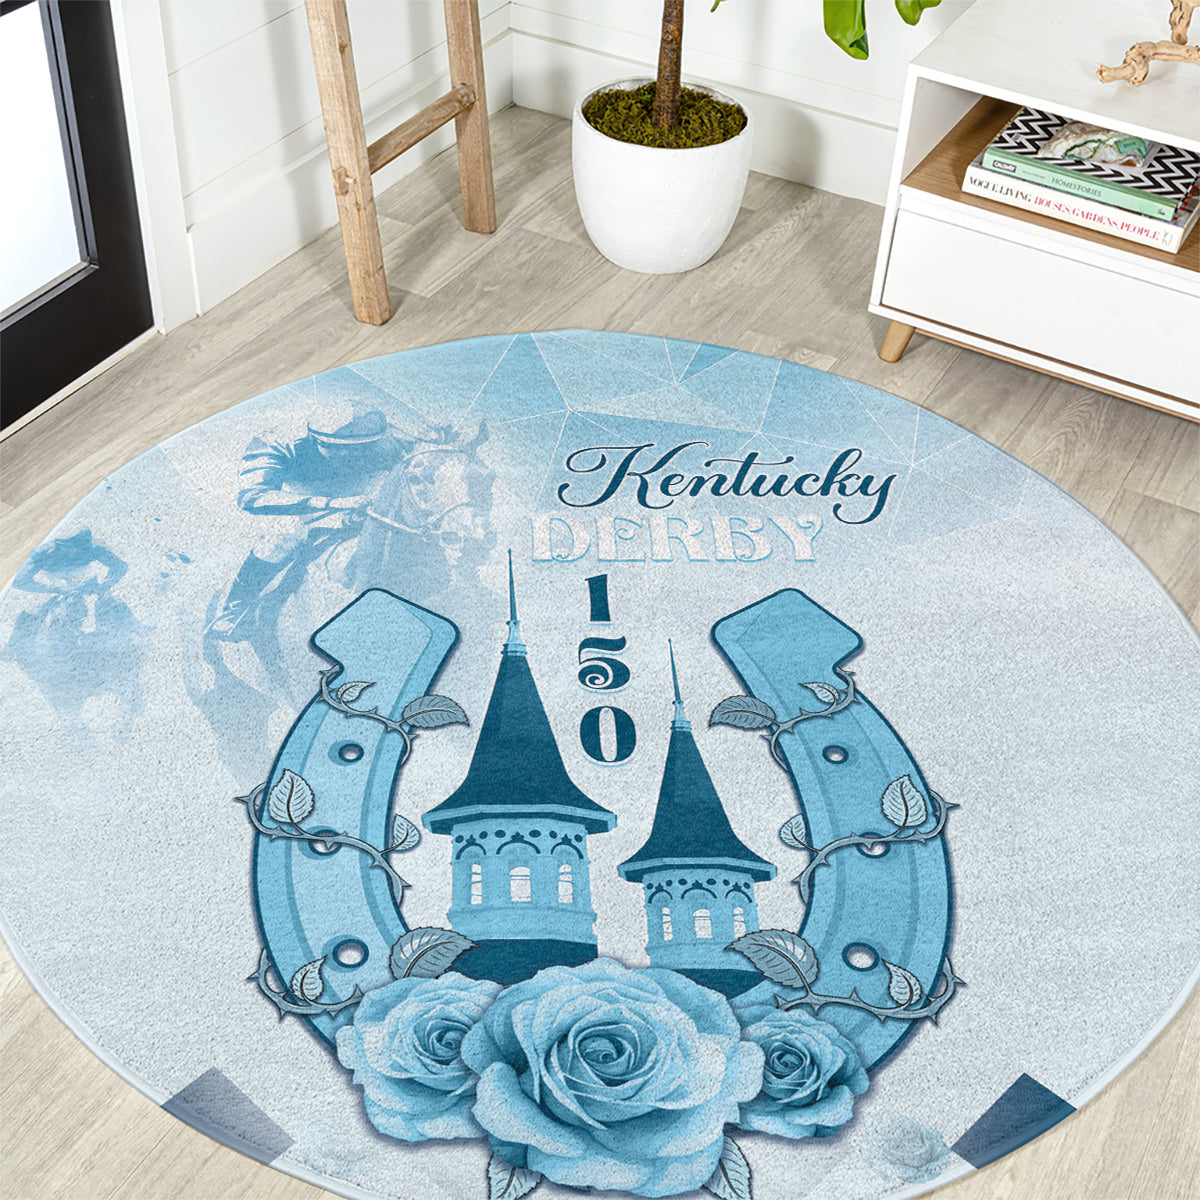 Kentucky Horse Racing Round Carpet 150th Anniversary Blue Version